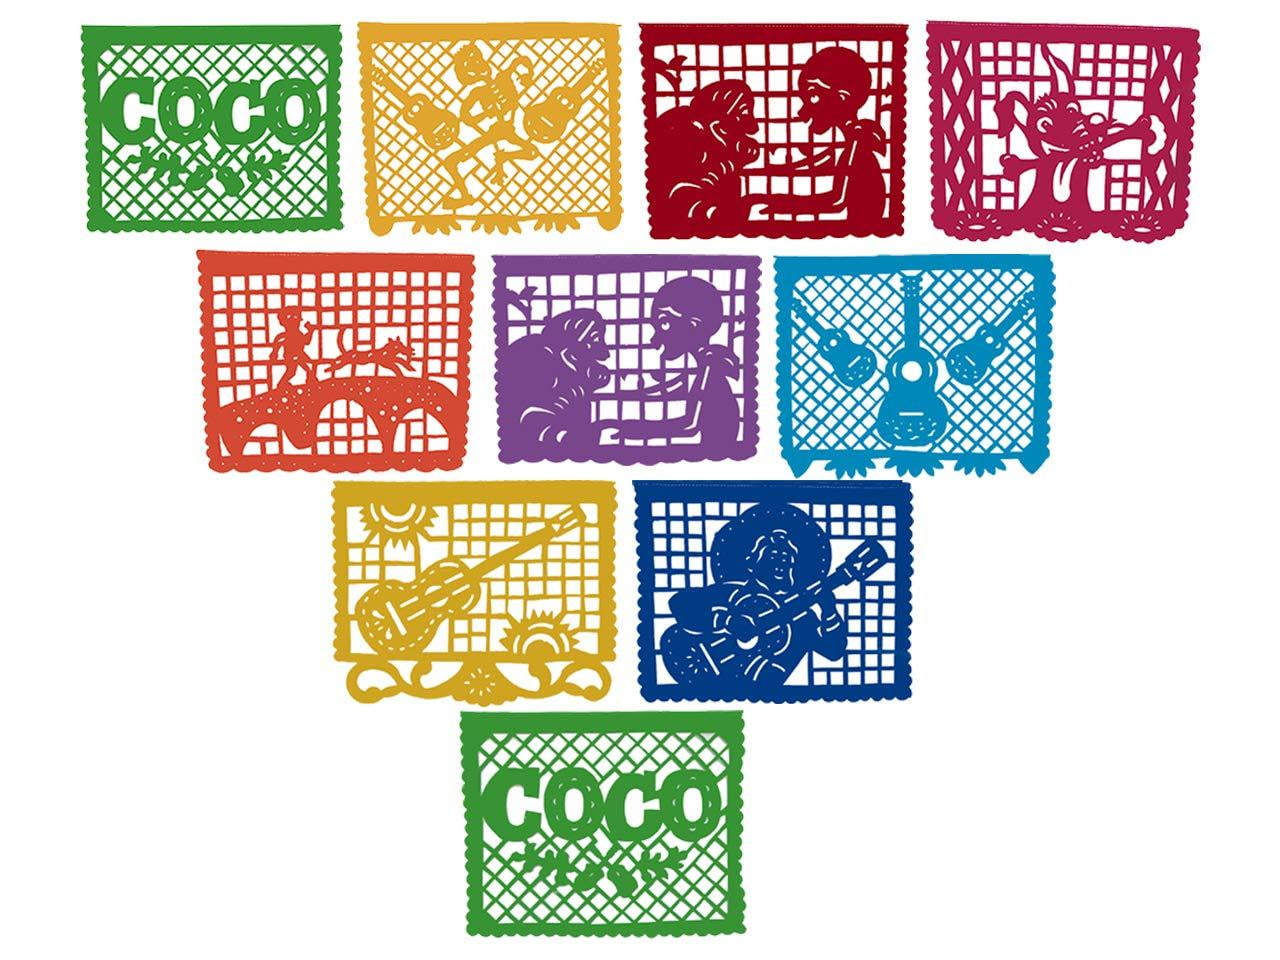 Decoramec Coco Movie Large Plastic Papel Picado Banner 10 Multicolored Panels 2 Pack